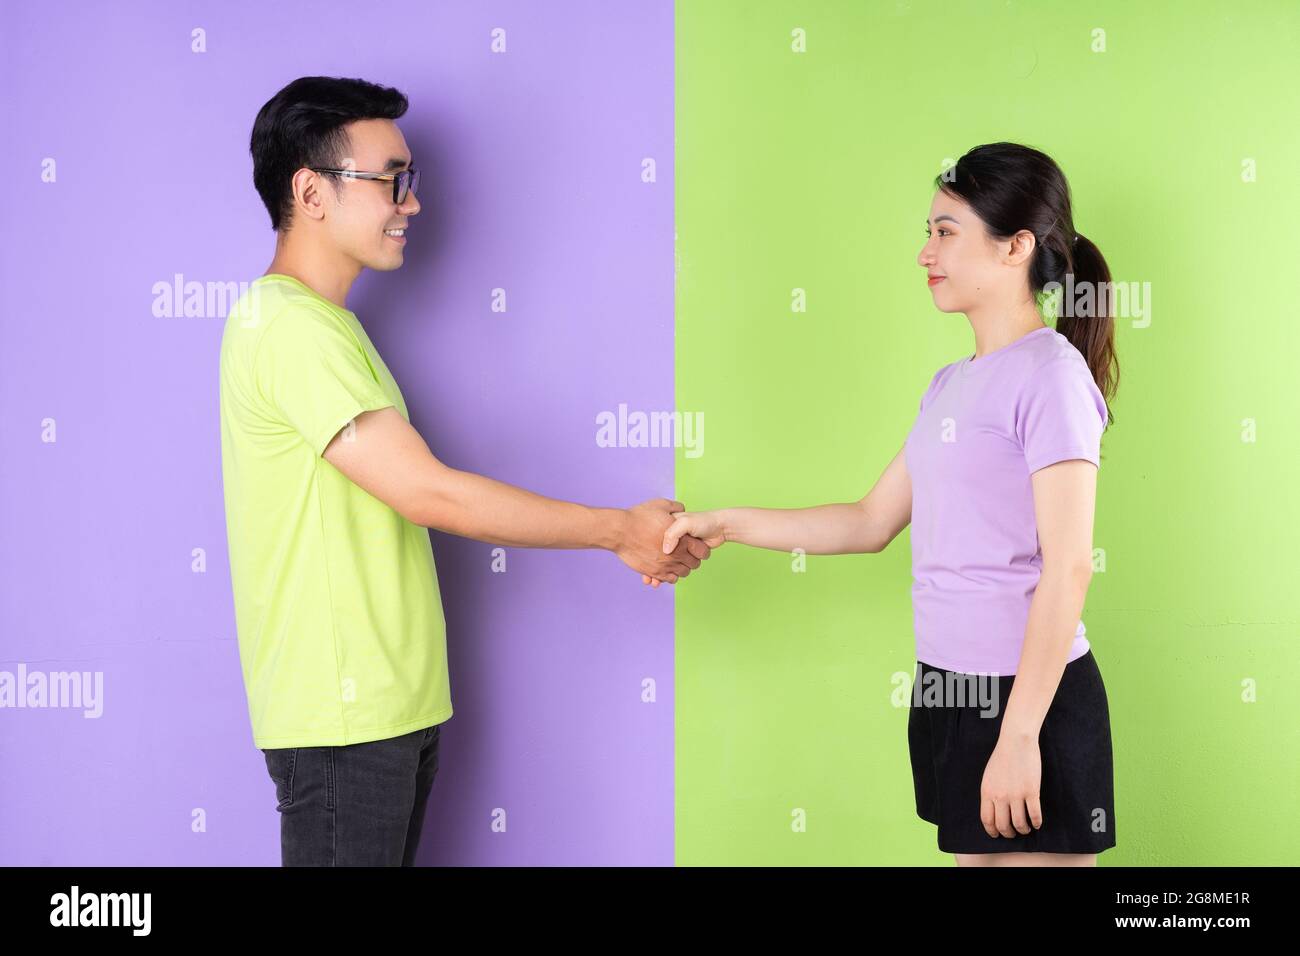 shaking hands logo purple